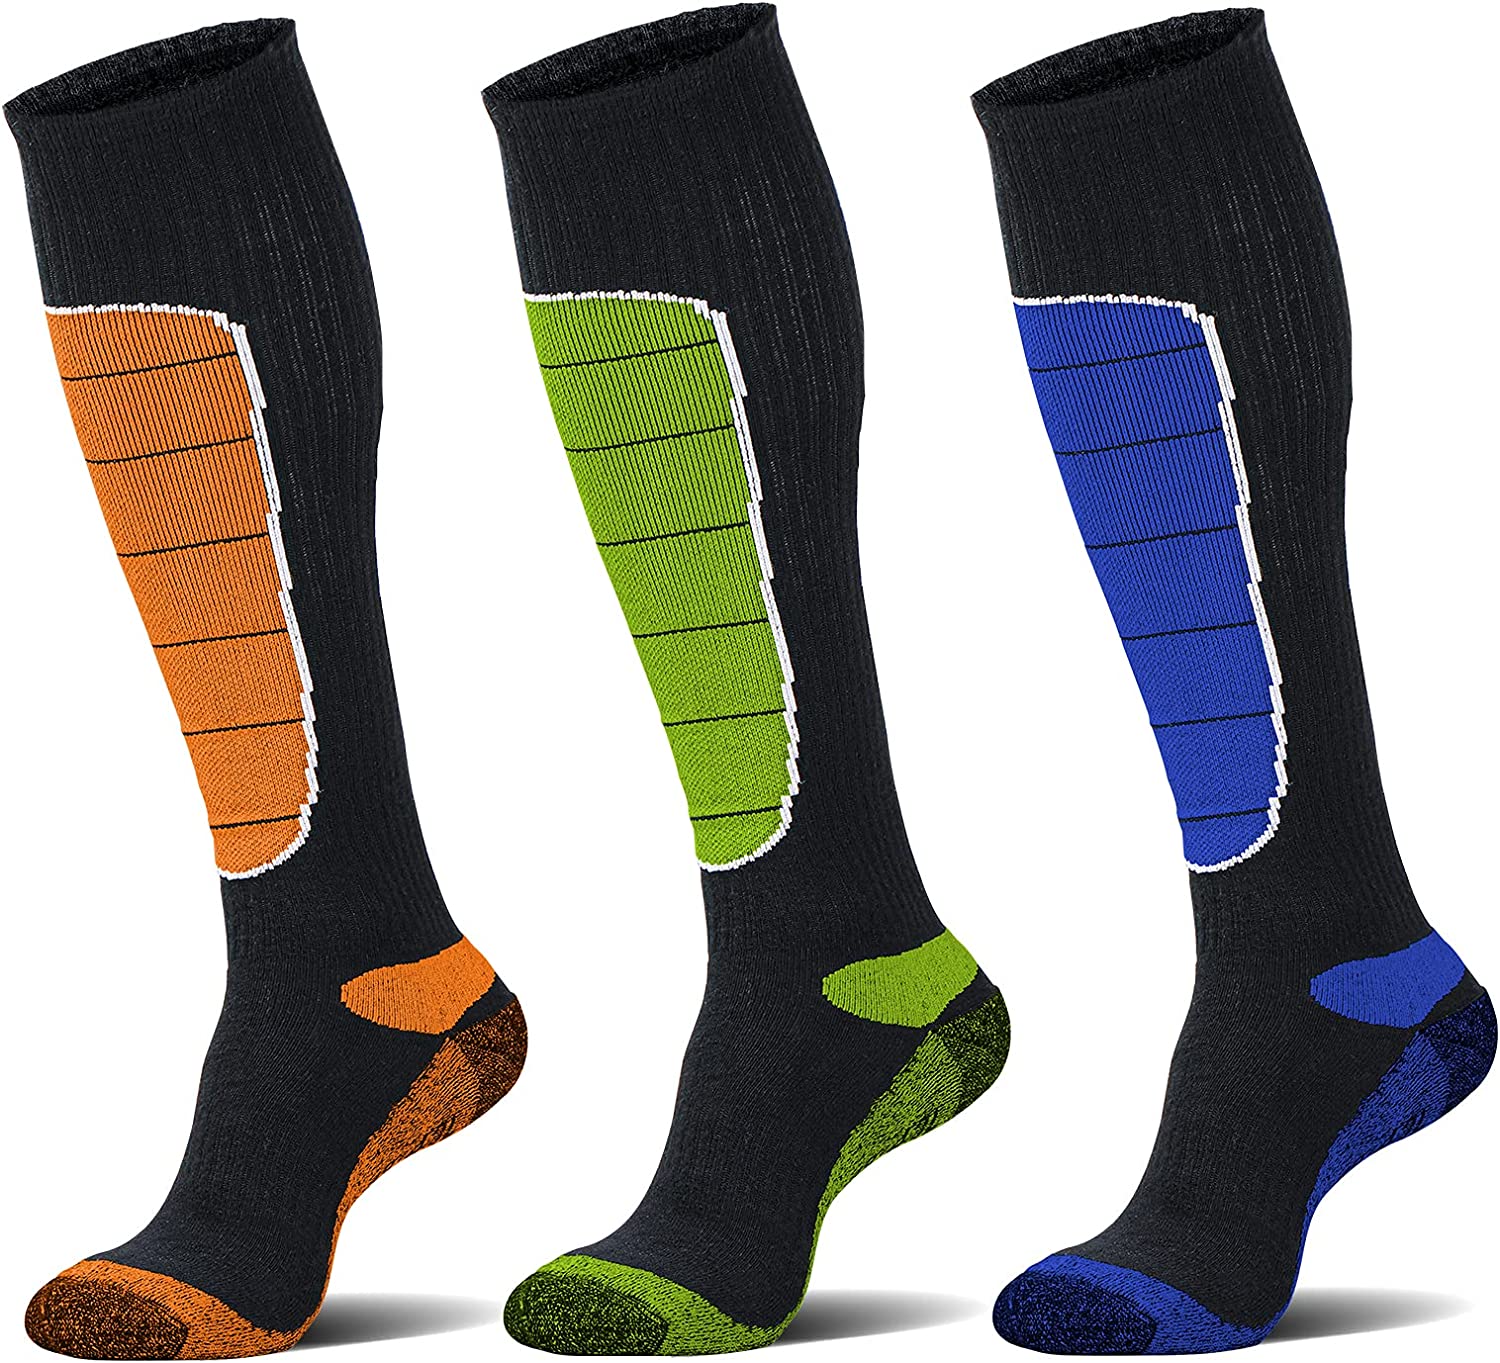 Hylaea Merino Wool Ski Socks, Cold Weather Socks for Snowboarding